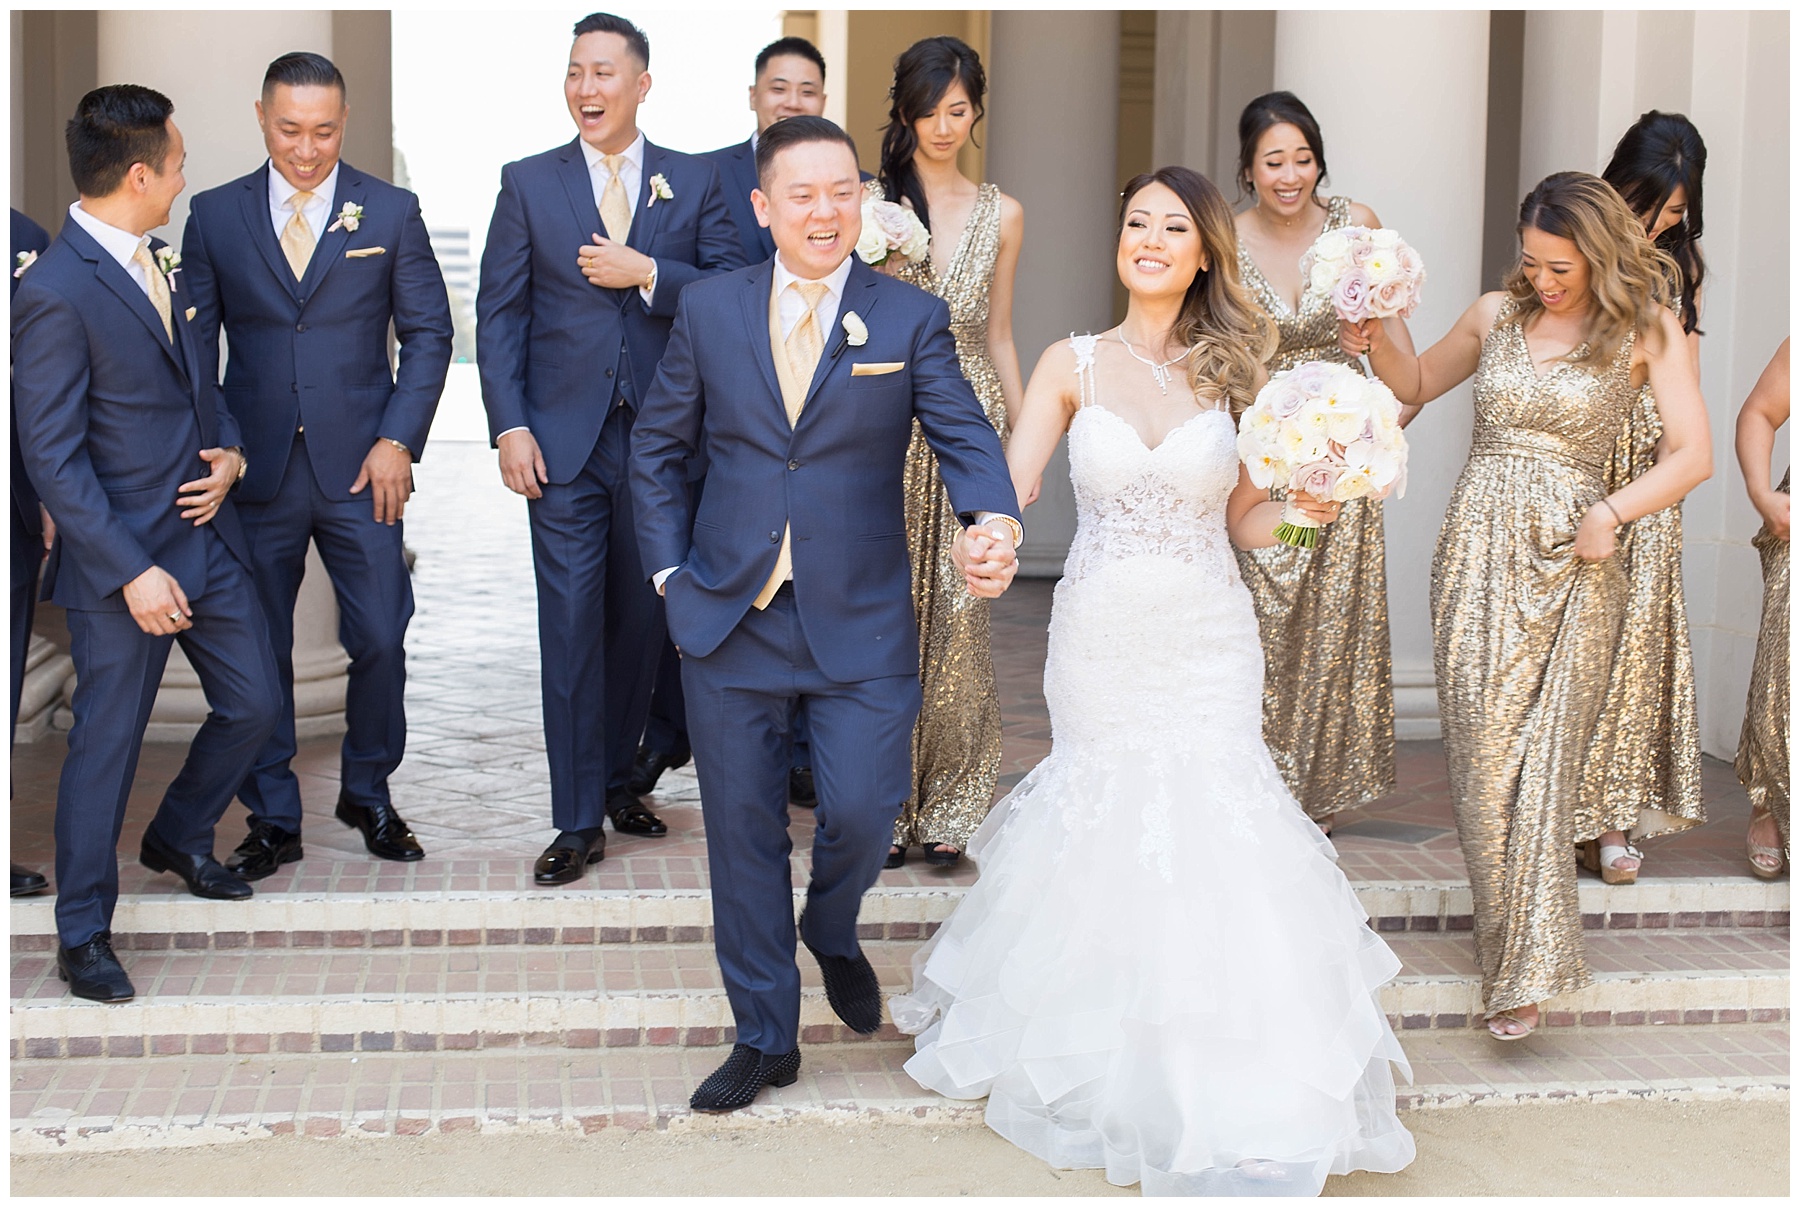 Pasadena City Hall Wedding and Hilton Reception